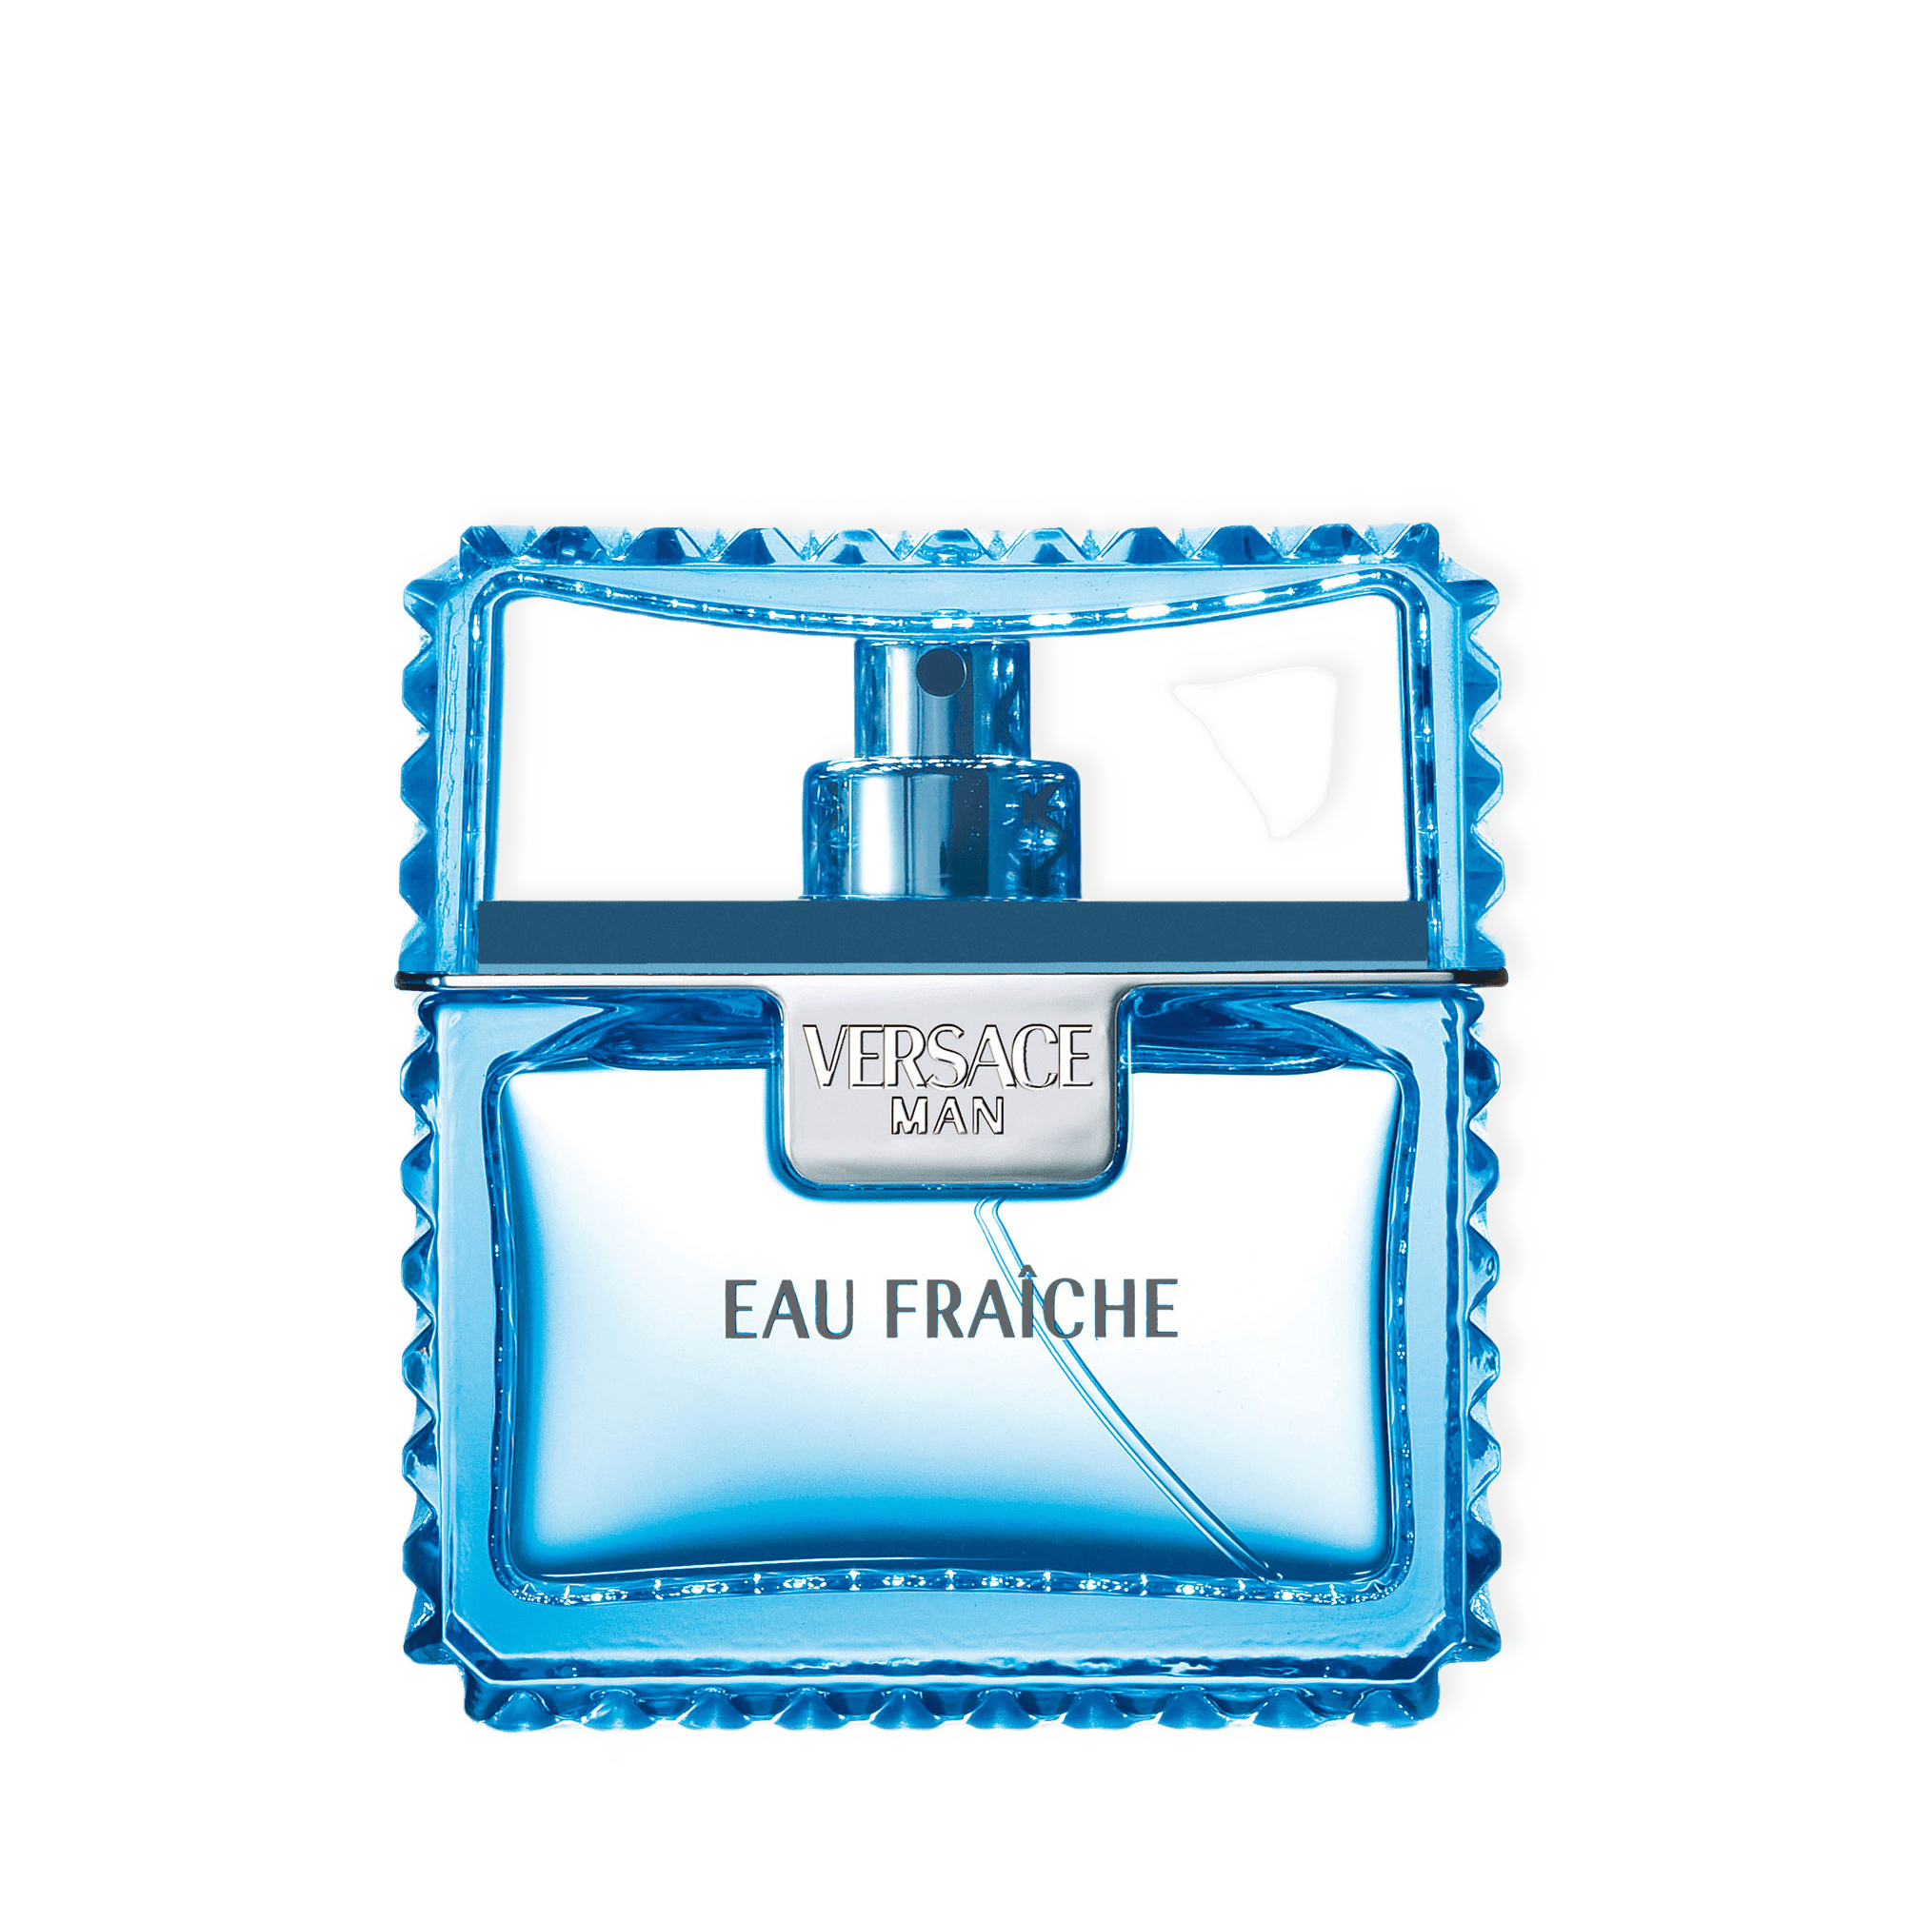 Eau Fraiche EdT från Versace